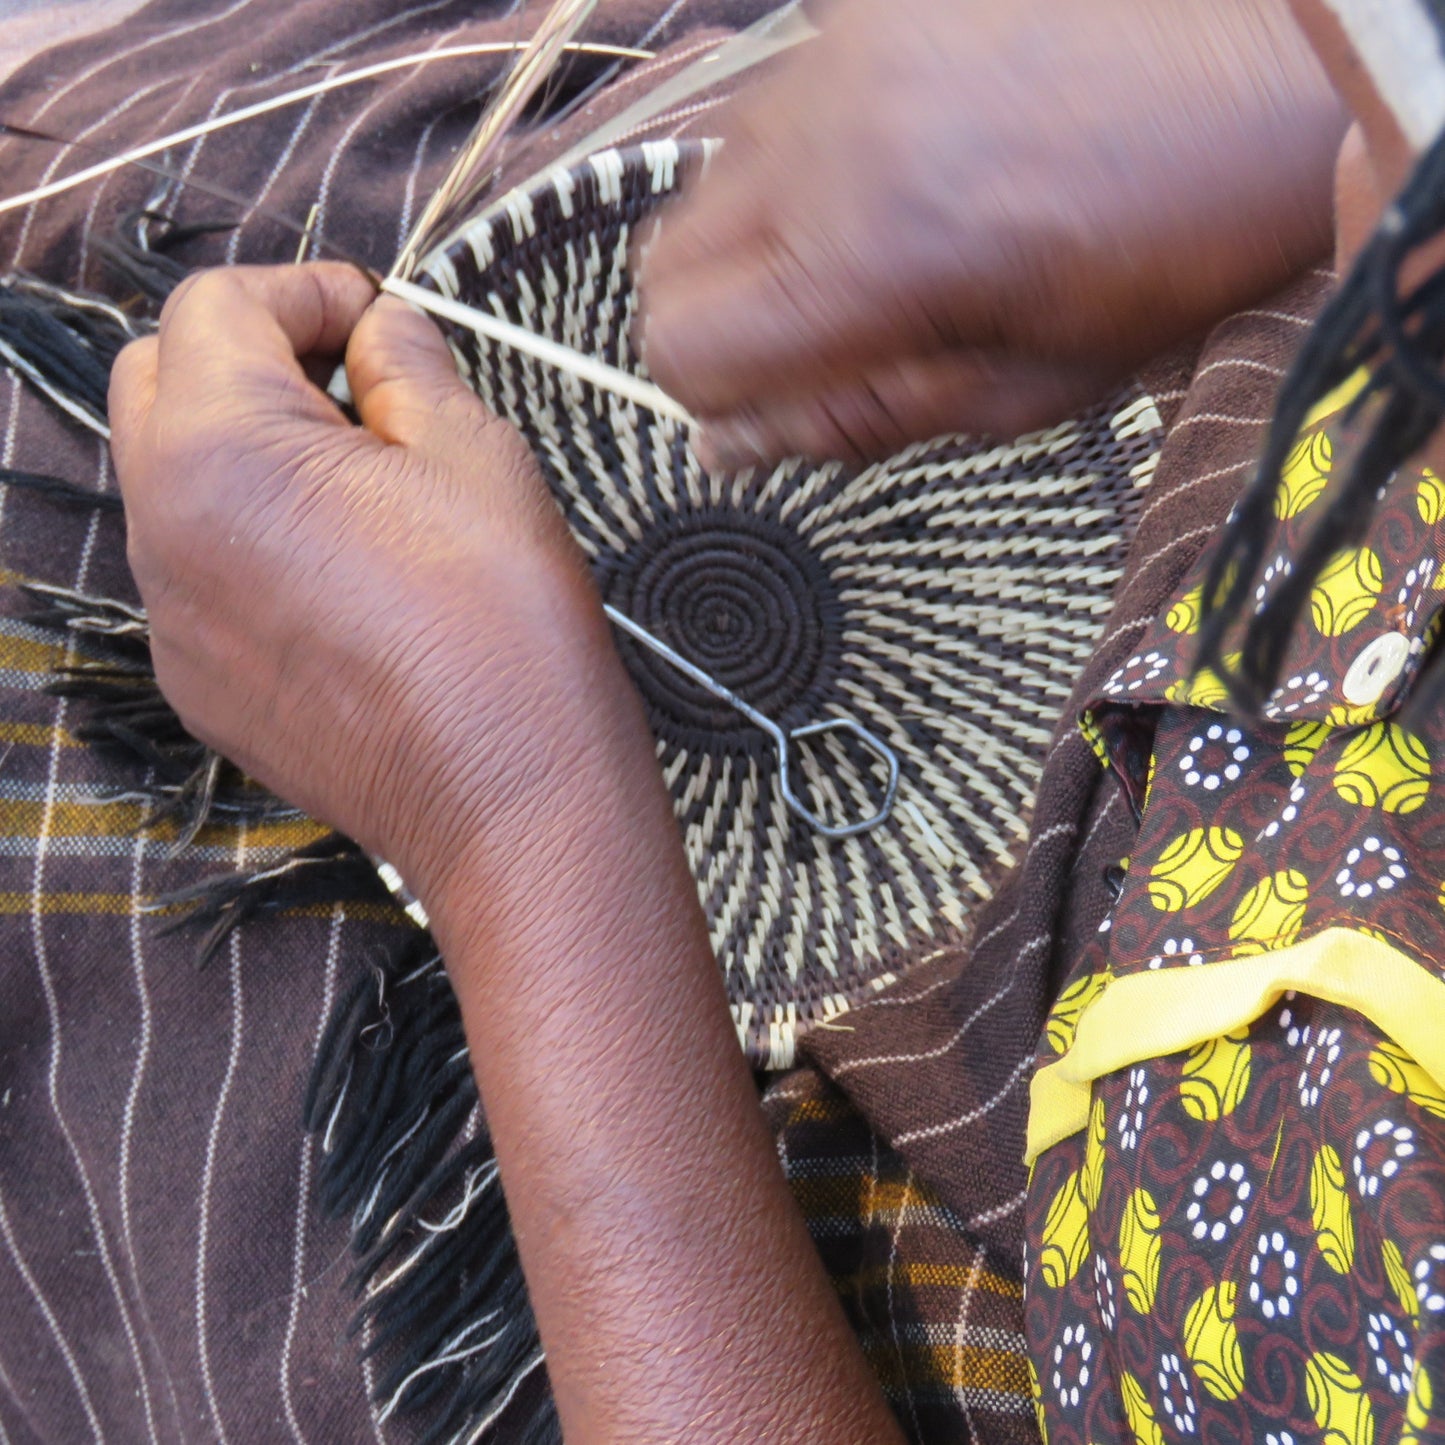 Namibia, Omba Art Trust, Basket Weaving